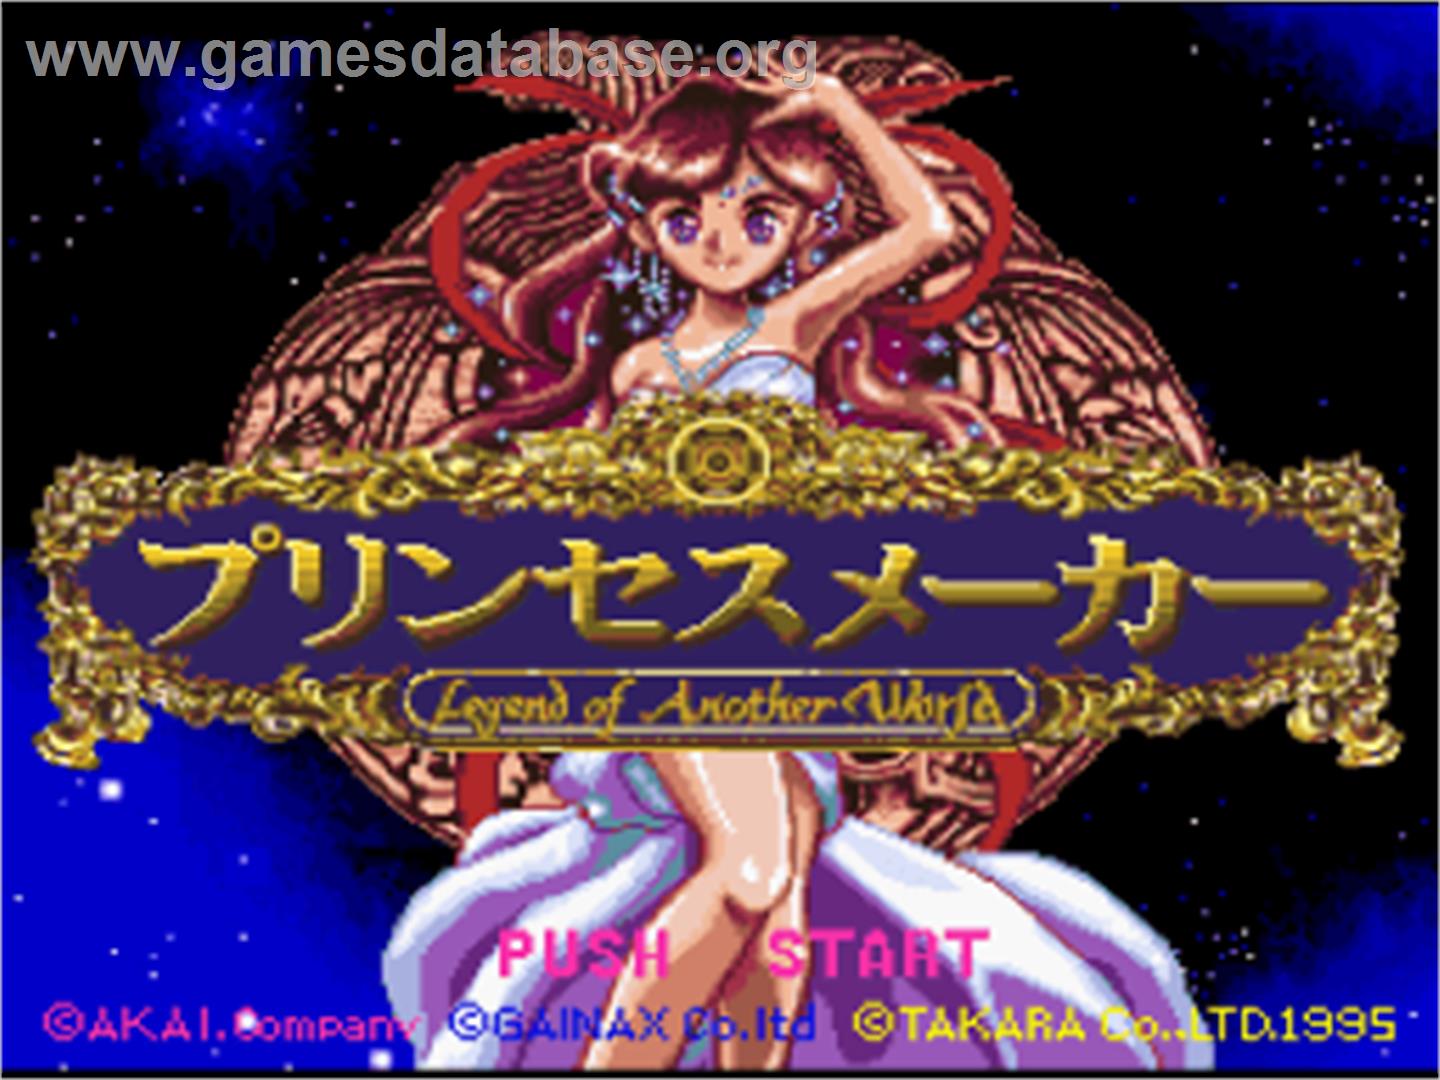 Princess Maker: Legend of Another World - Nintendo SNES - Artwork - Title Screen